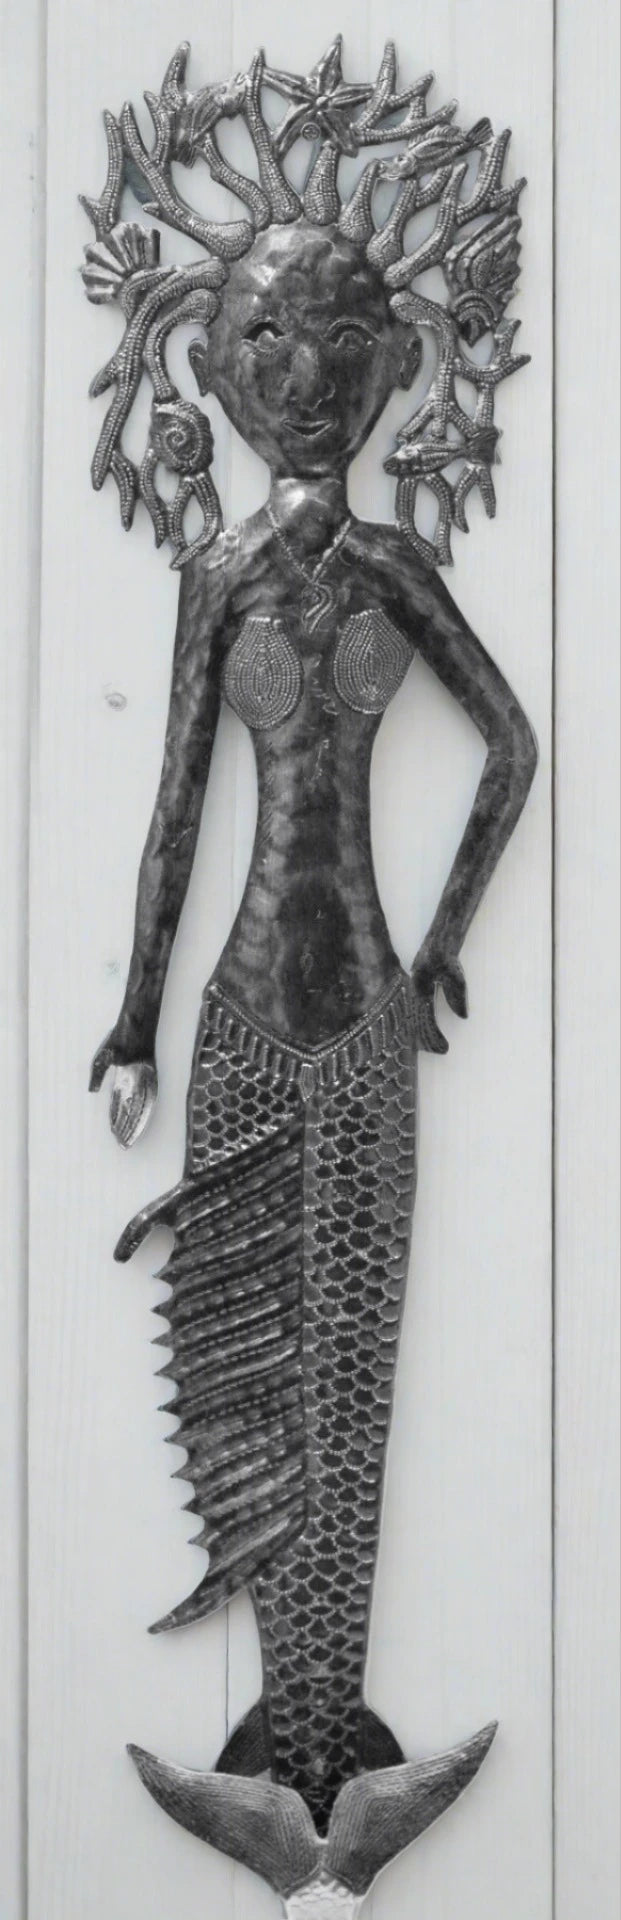 Haitin Tin Art- Flipped Tail Mermaid